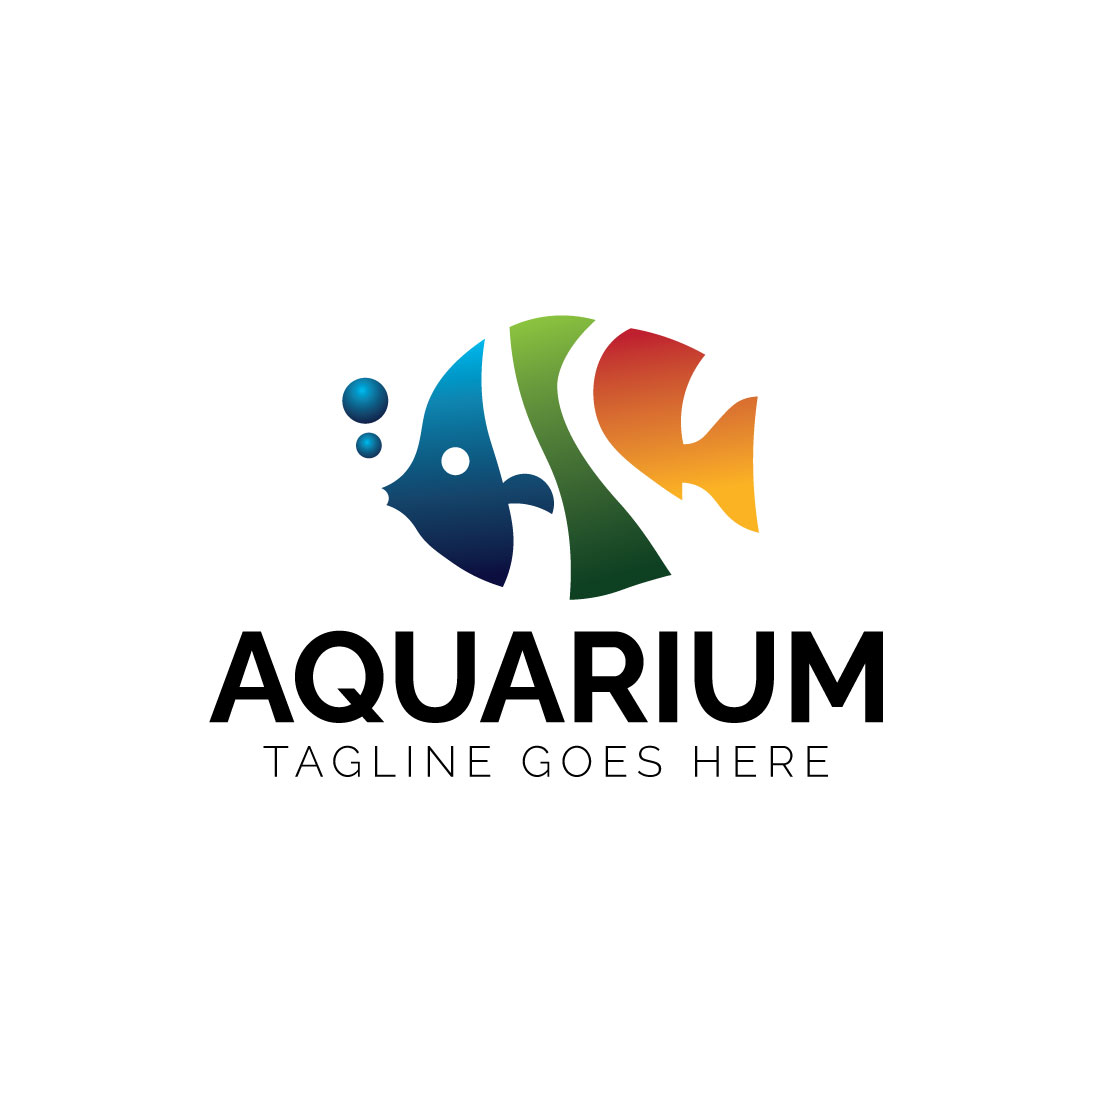 Aquarium Logo preview image.